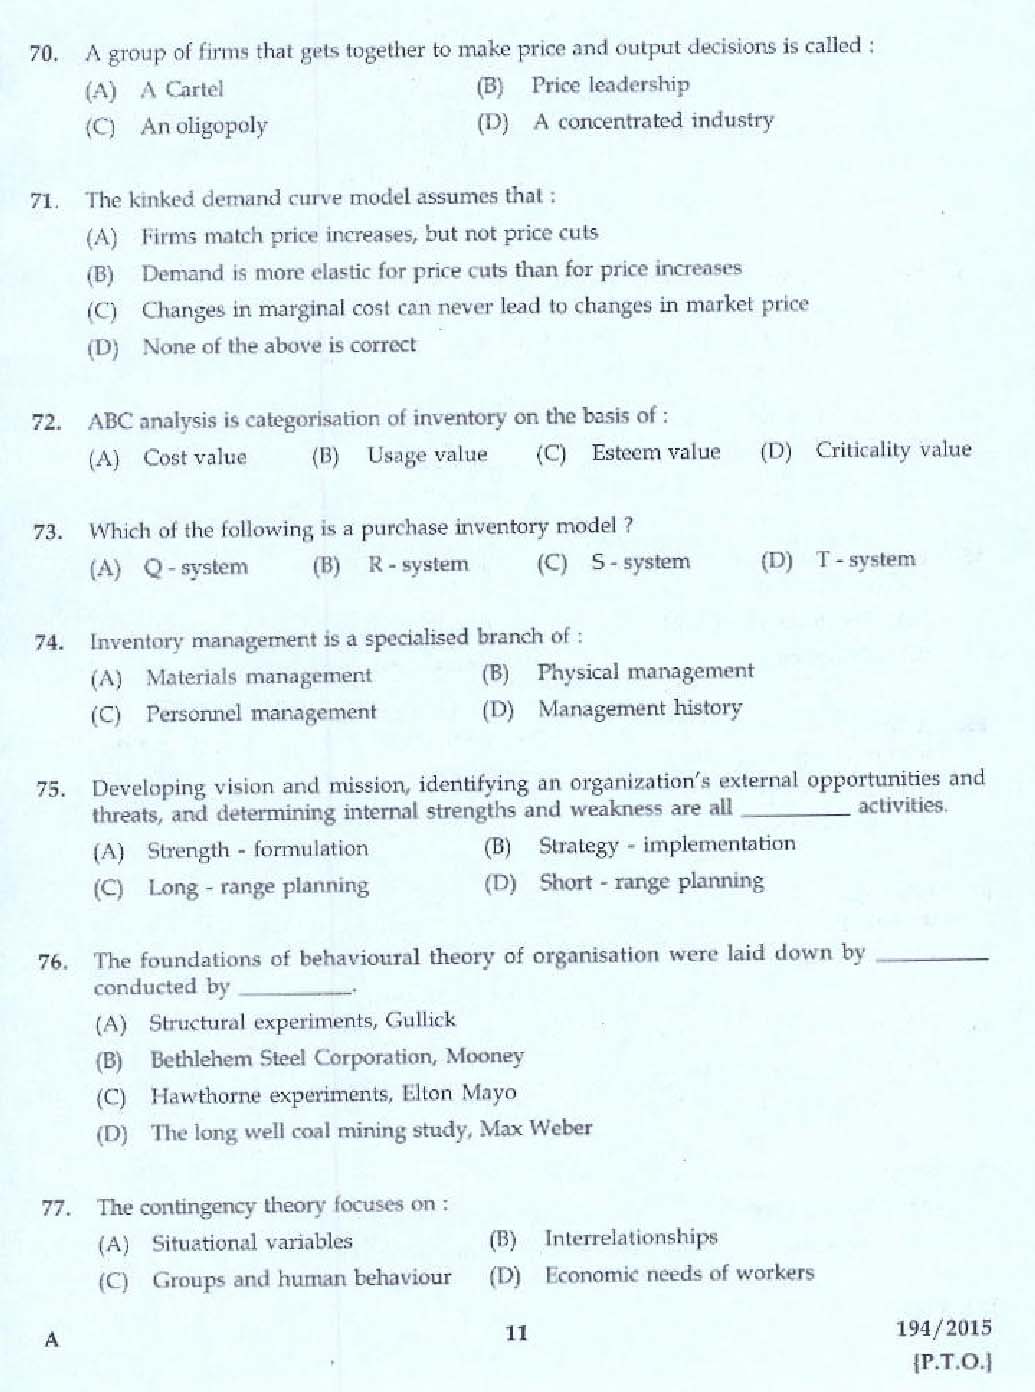 Kerala PSC Store Keeper Exam Question Code 1942015 7